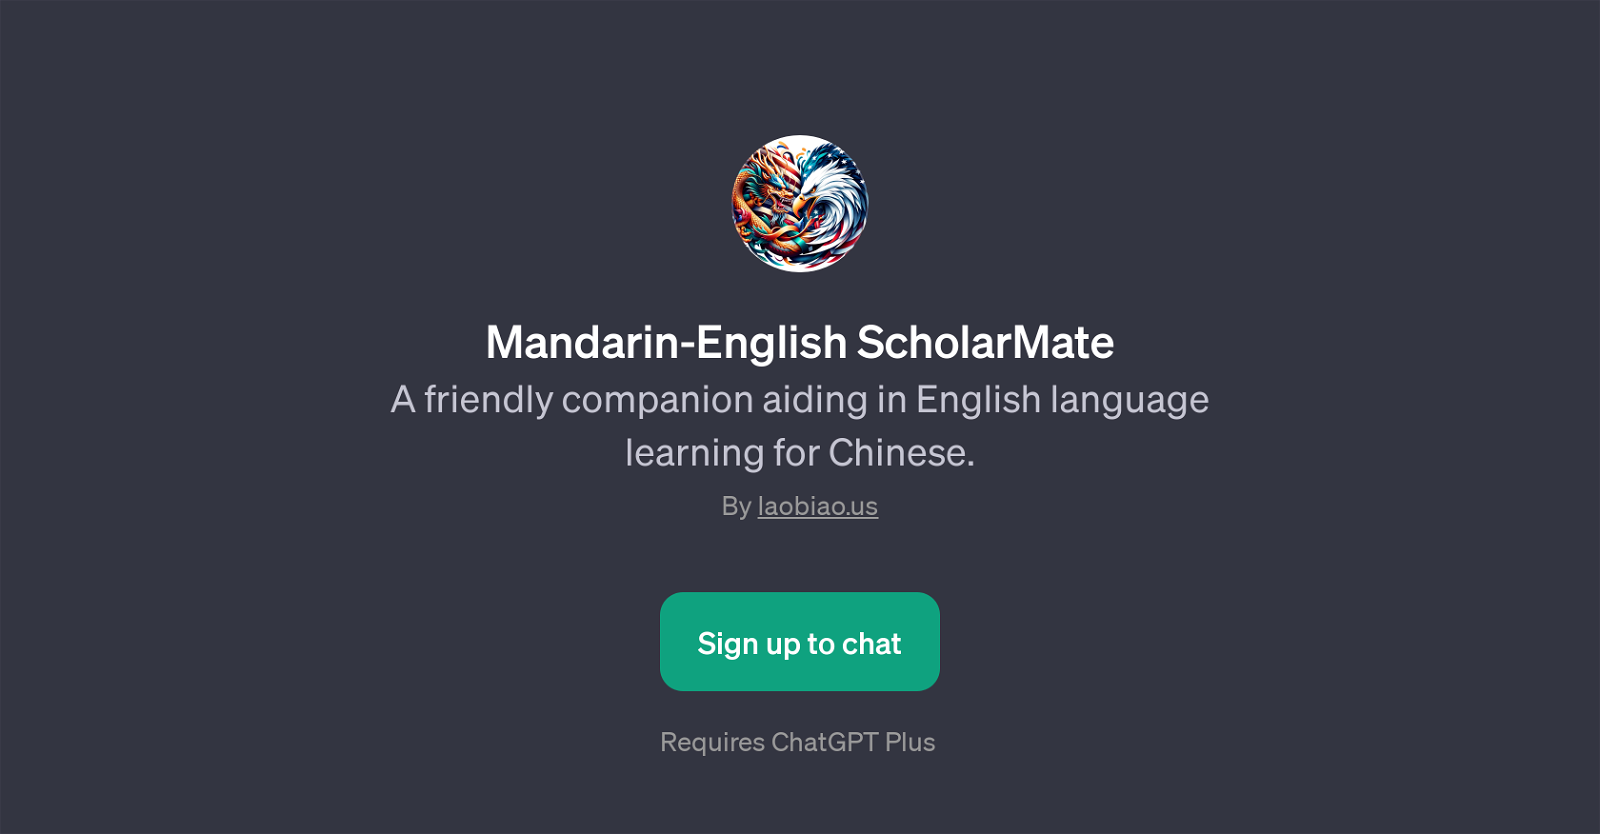 Mandarin-English ScholarMate website